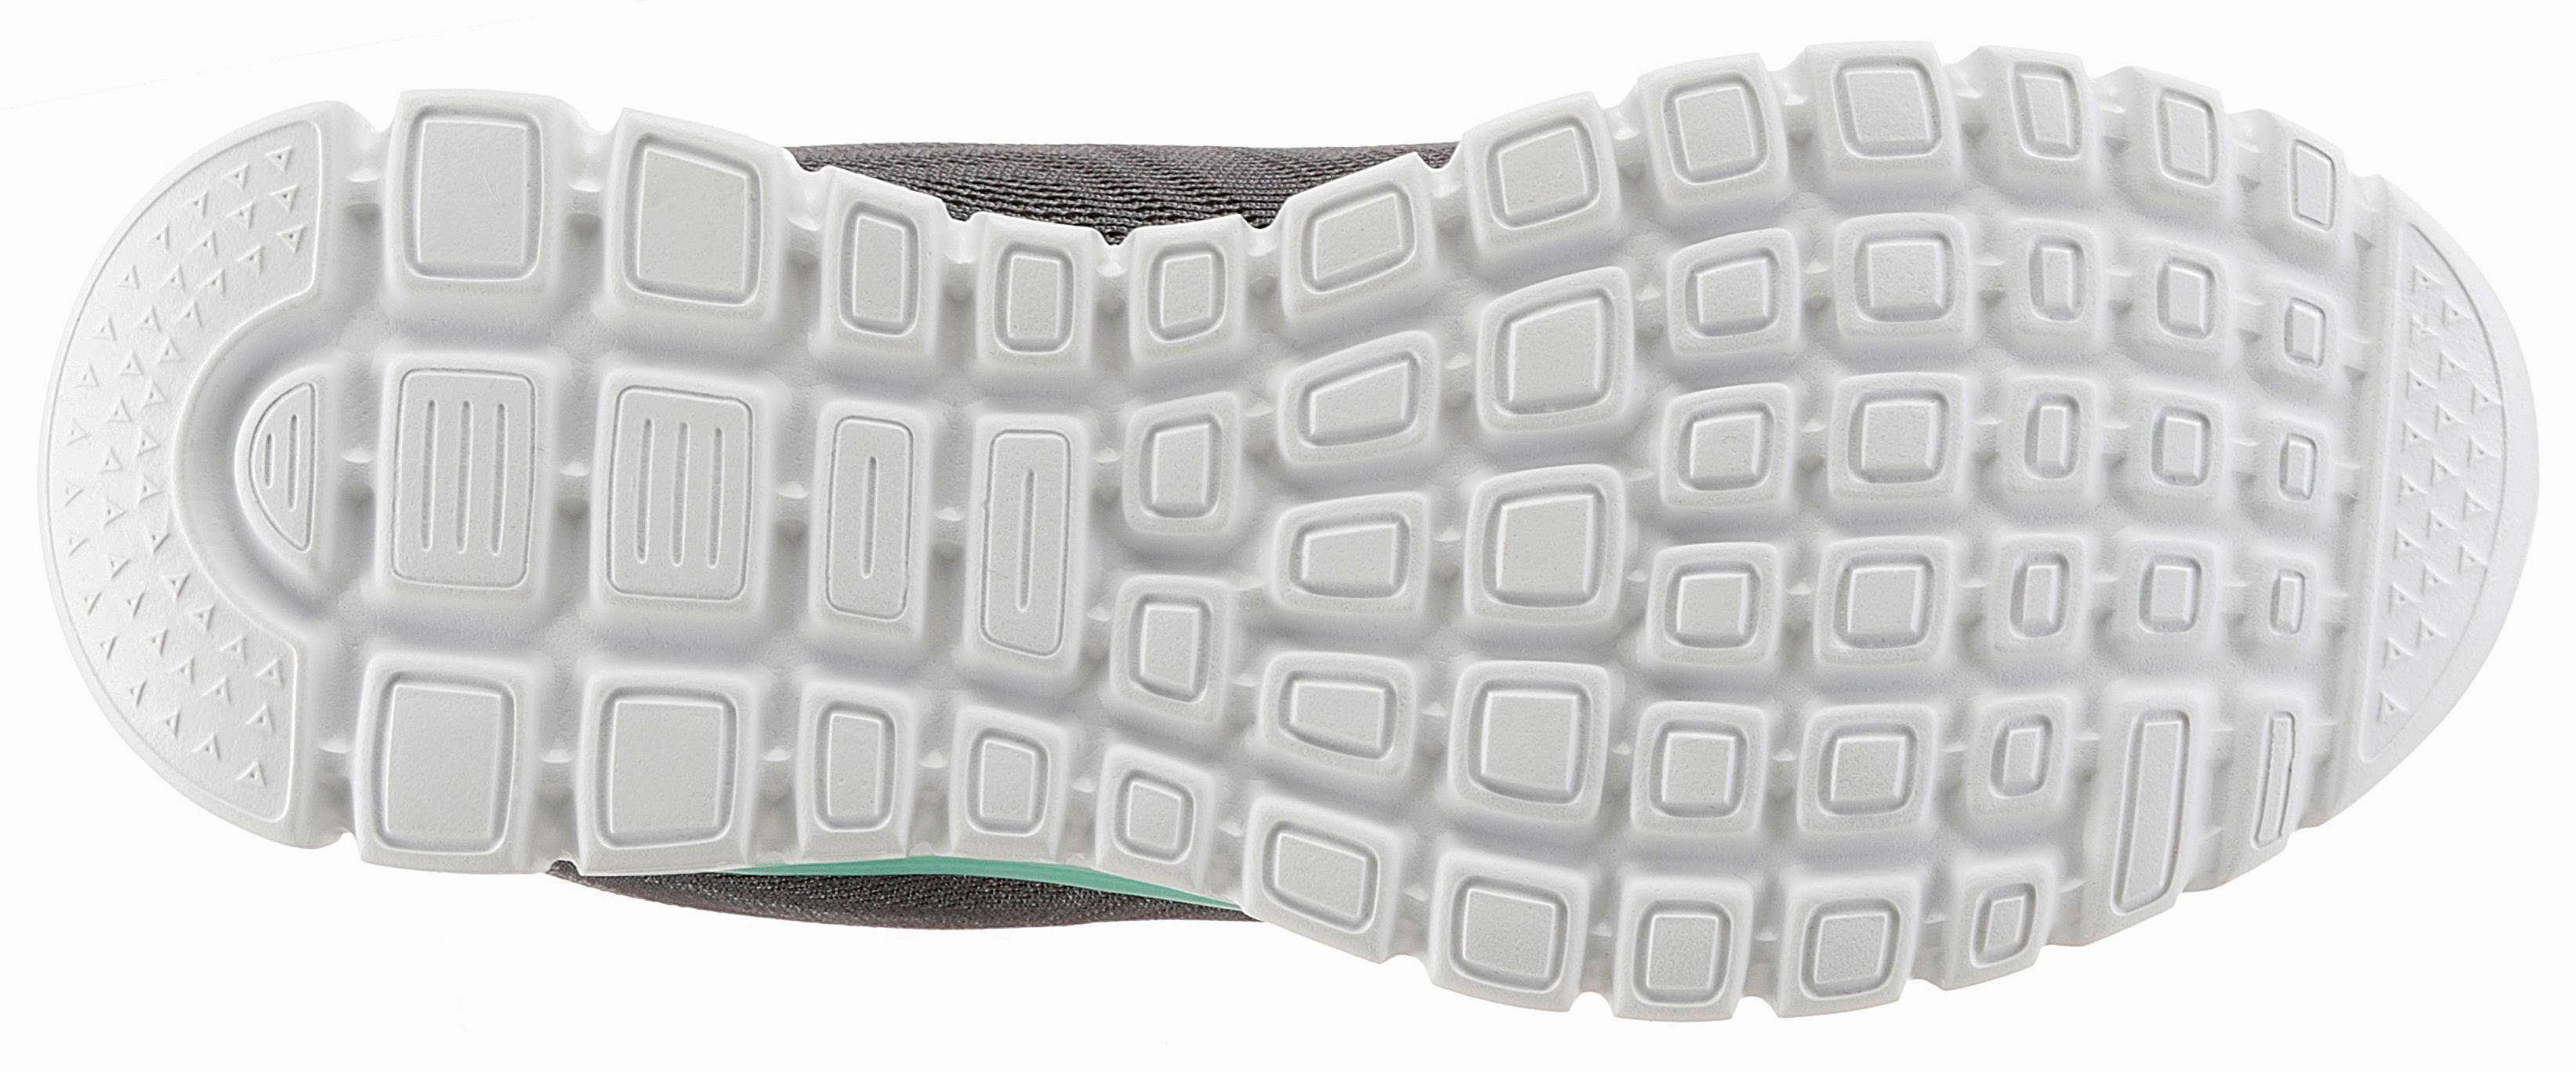 Skechers Foam Connected grau-mint Get - mit Sneaker Graceful Dämpfung durch Memory